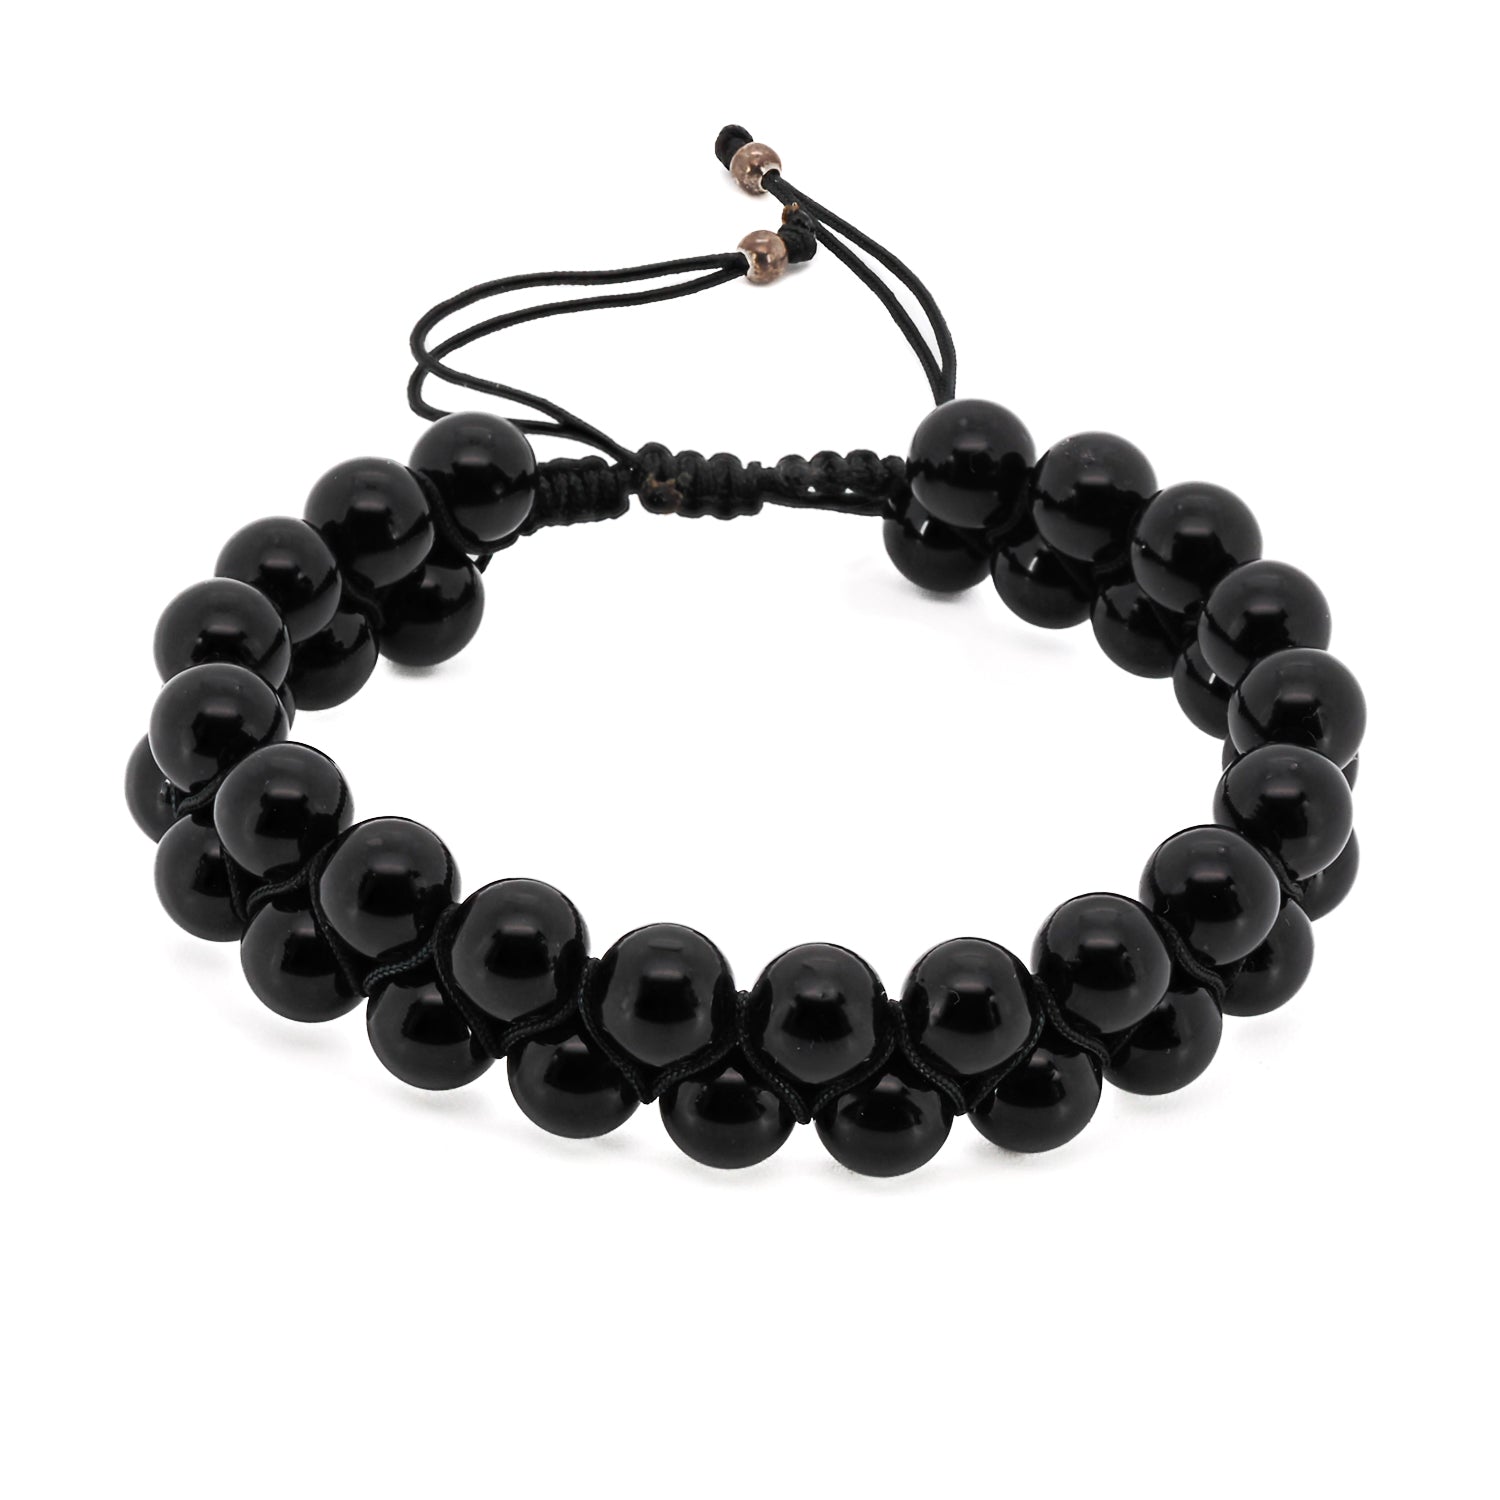 Black Onyx Self Control Bracelet on a white background